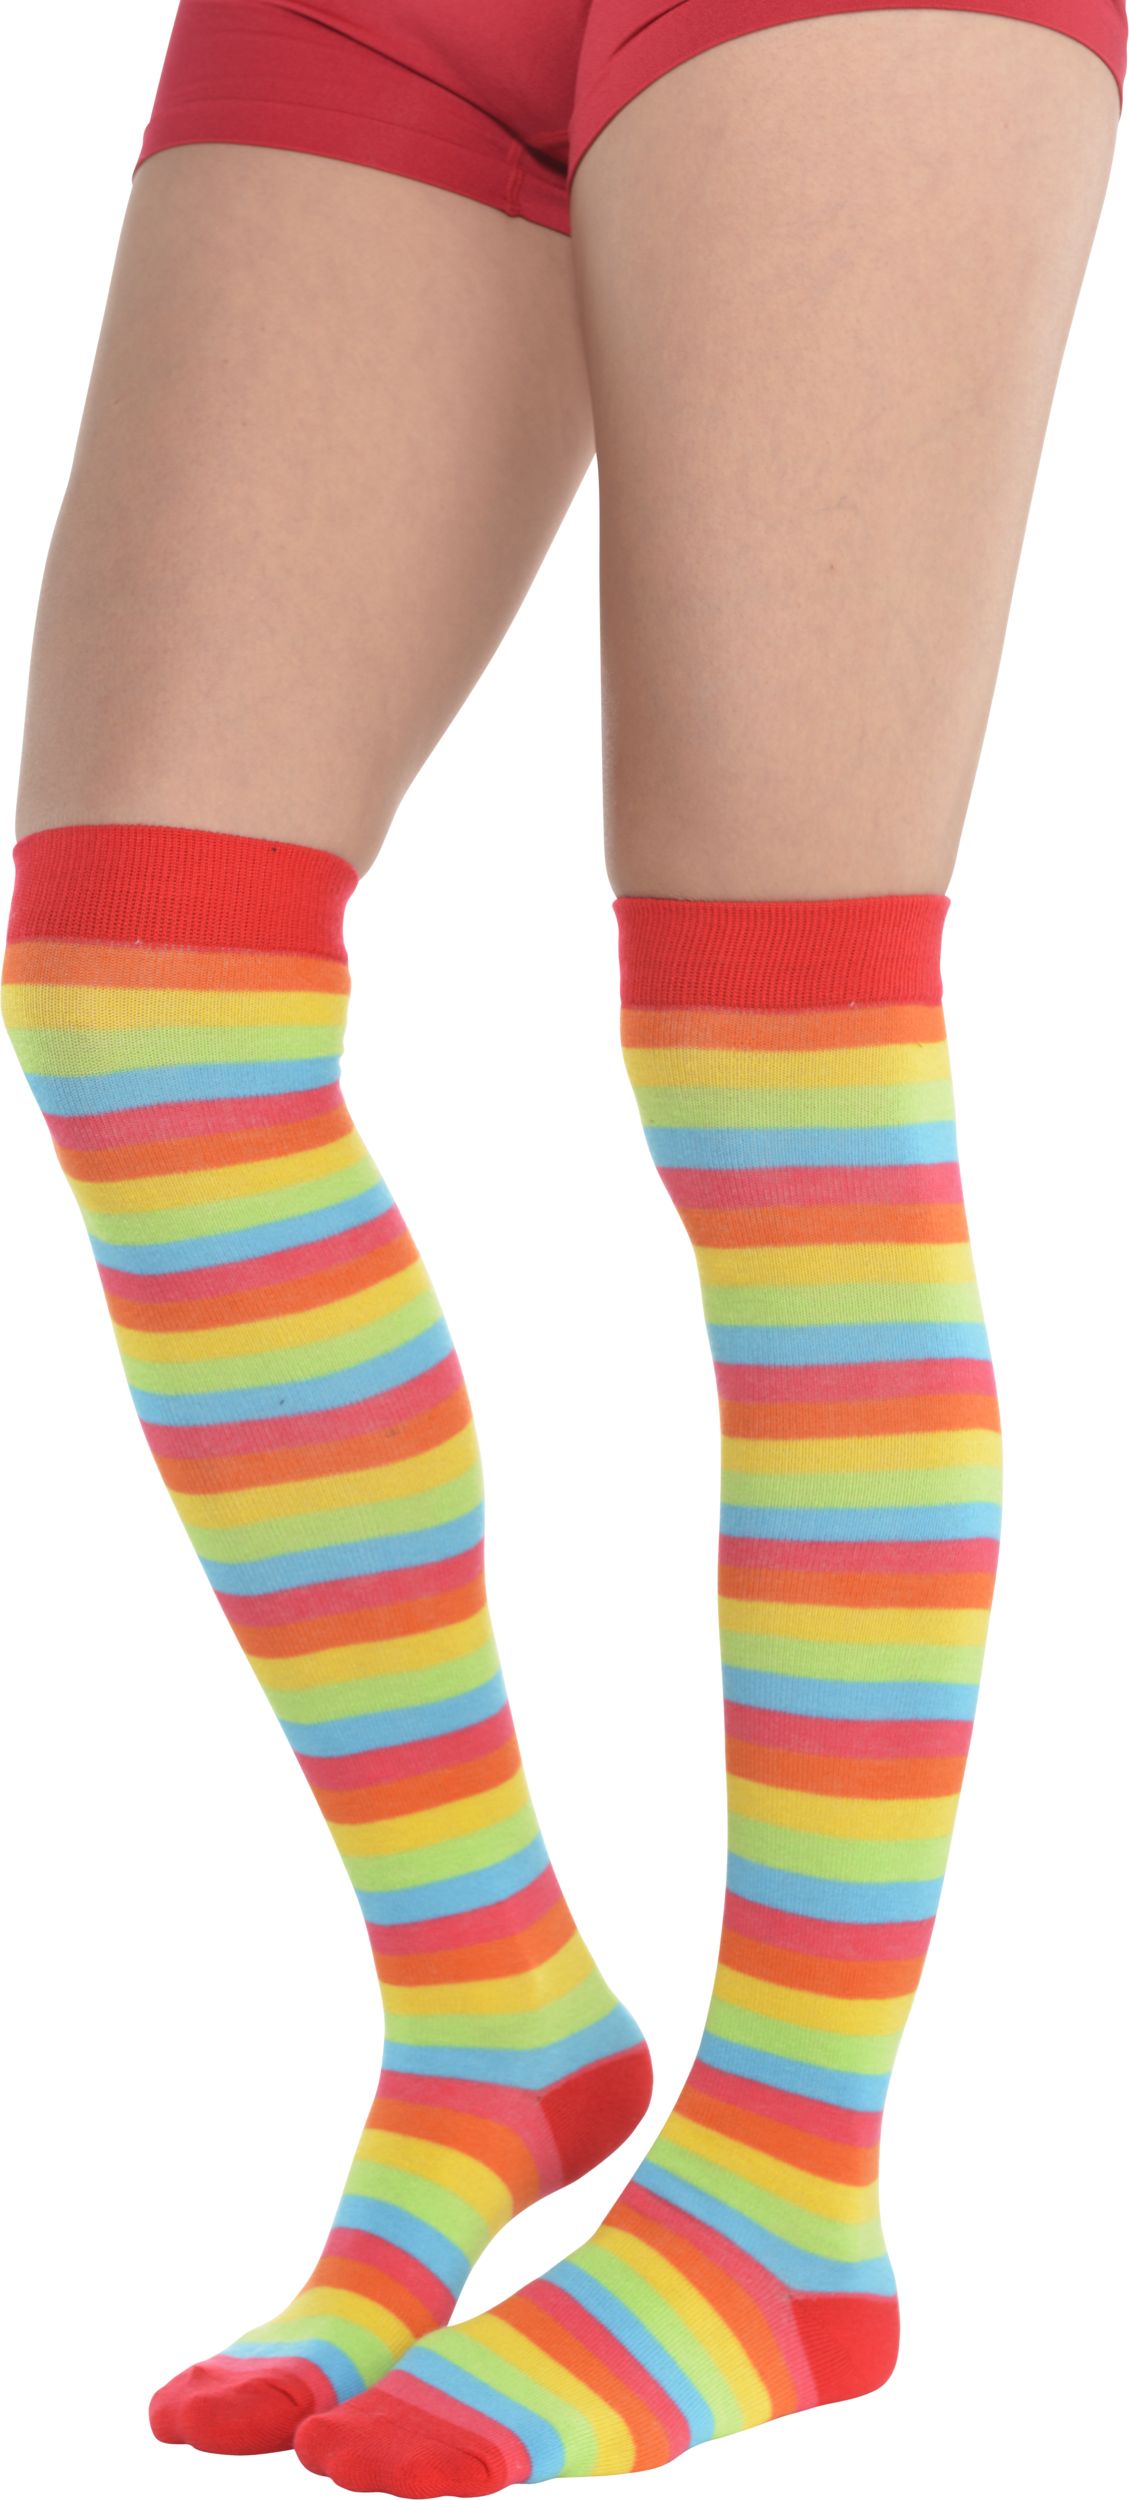 Adult Knee High Socks, Rainbow Striped, One Size, Wearable Costume